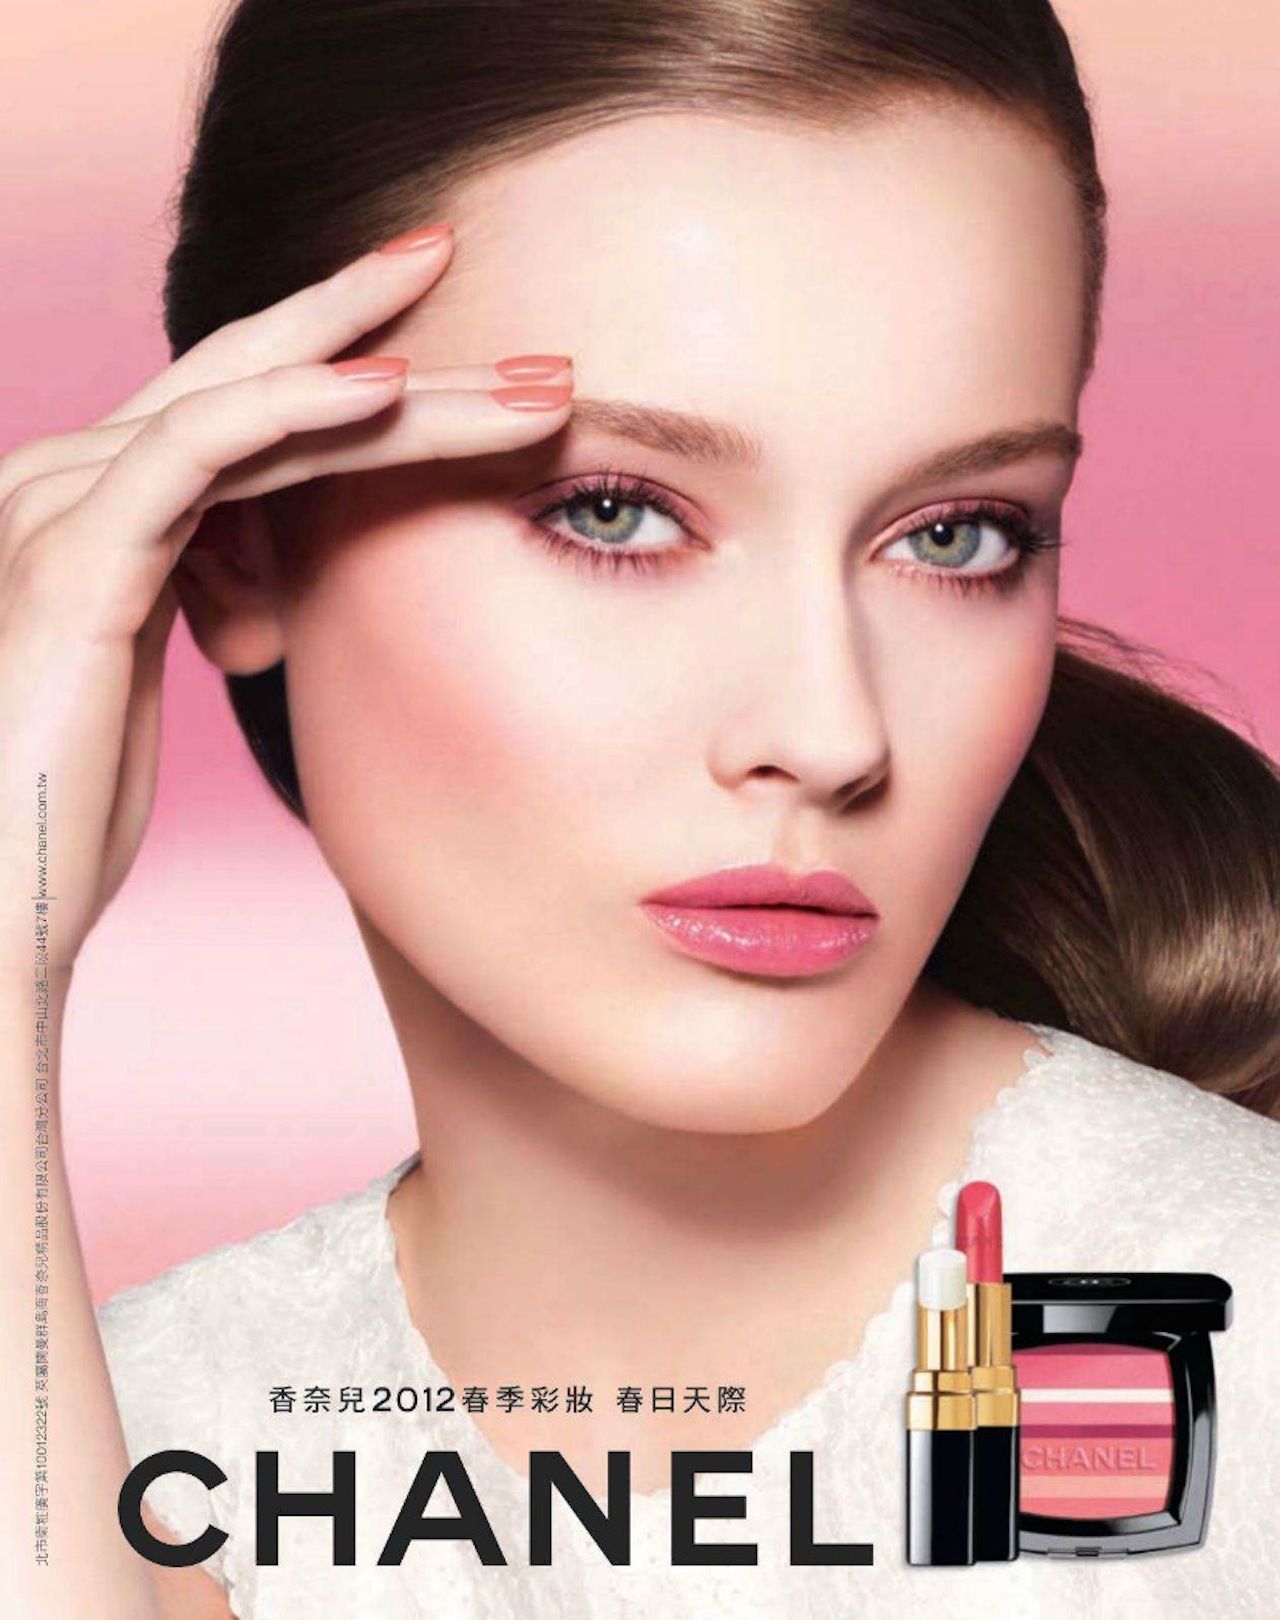 Advertisements chanel makeup canada online